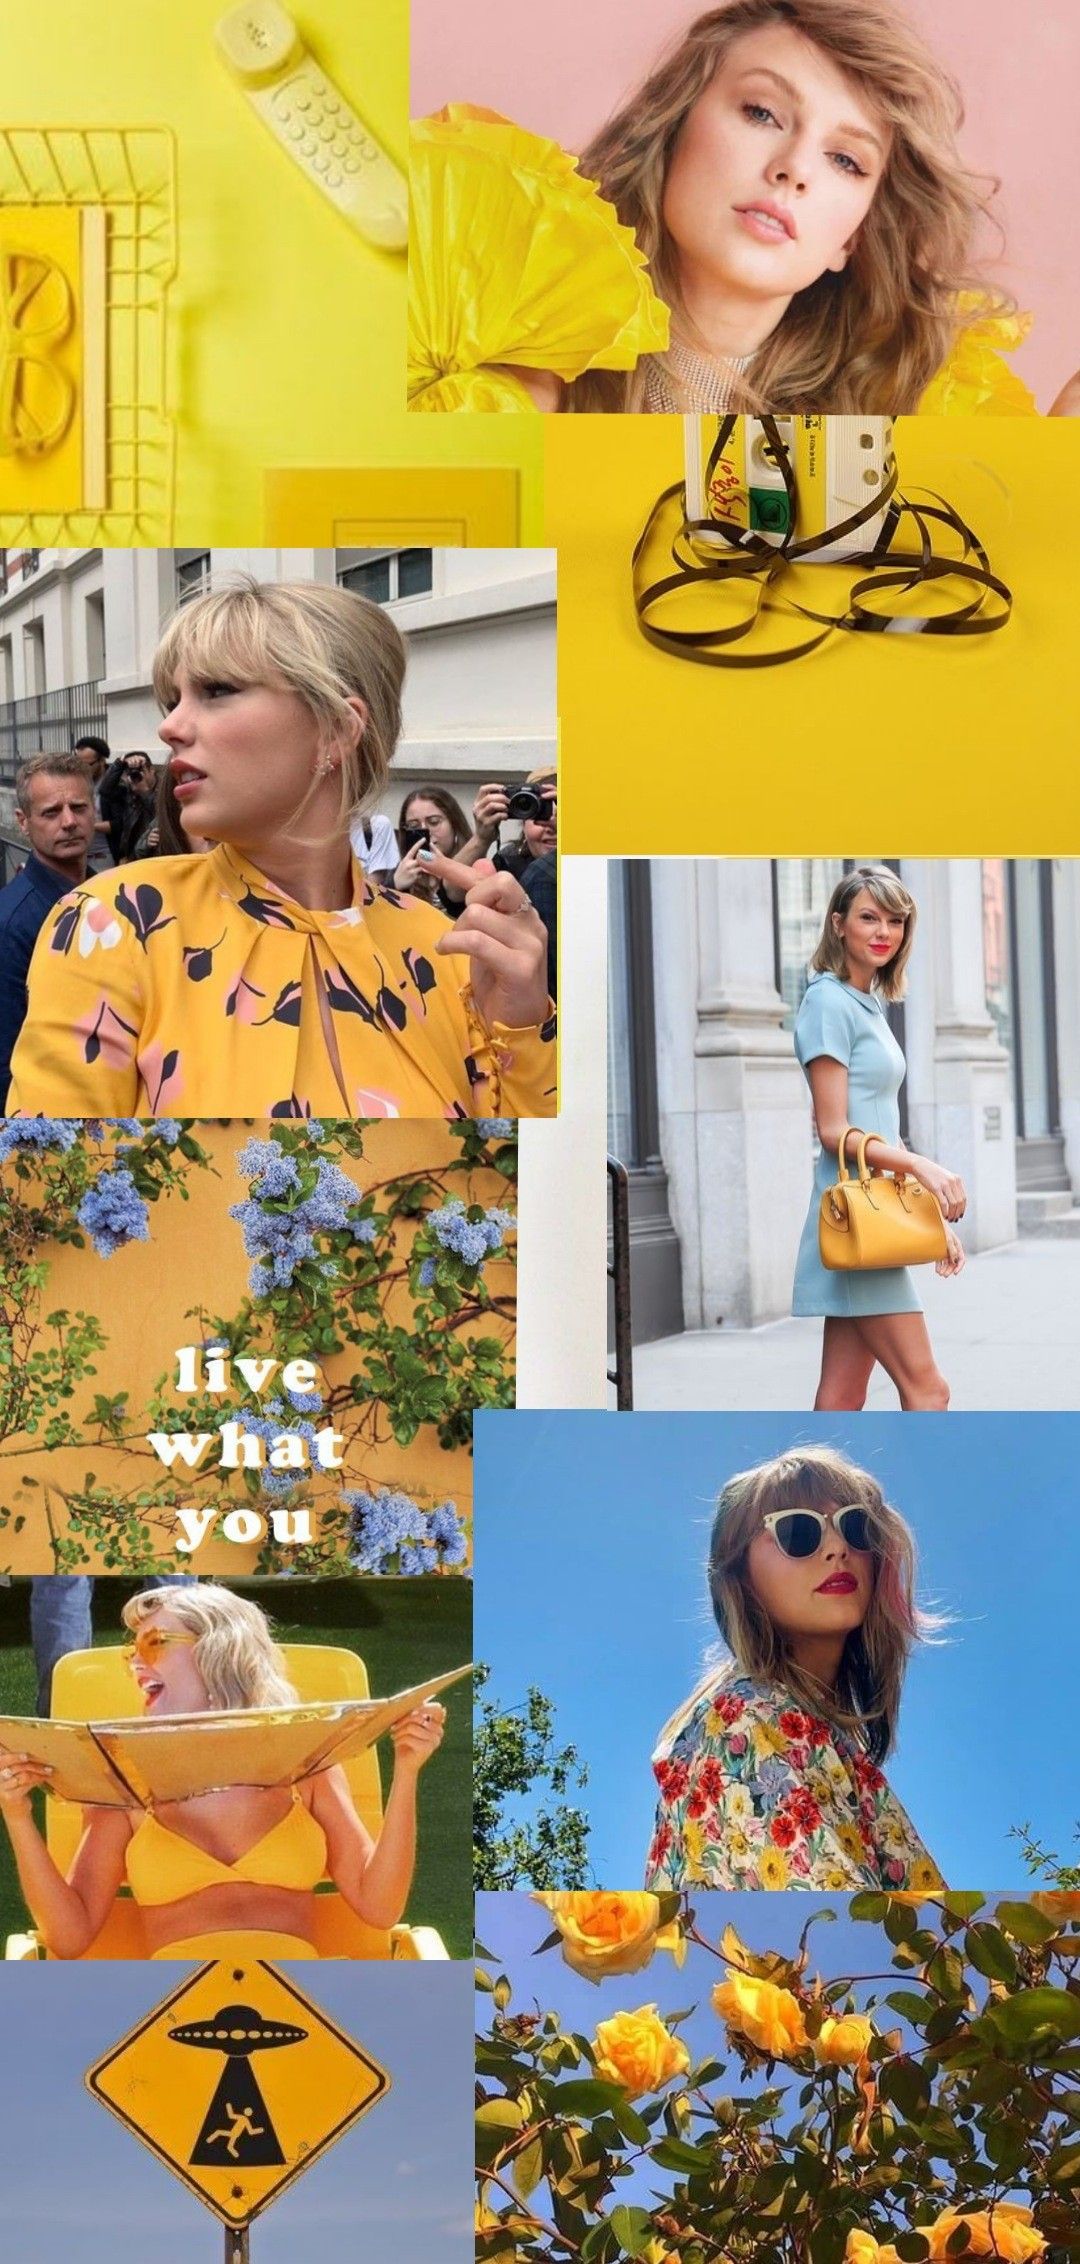 Taylor Swift yellow wallpaper. Yellow wallpaper, Yellow, Taylor swift